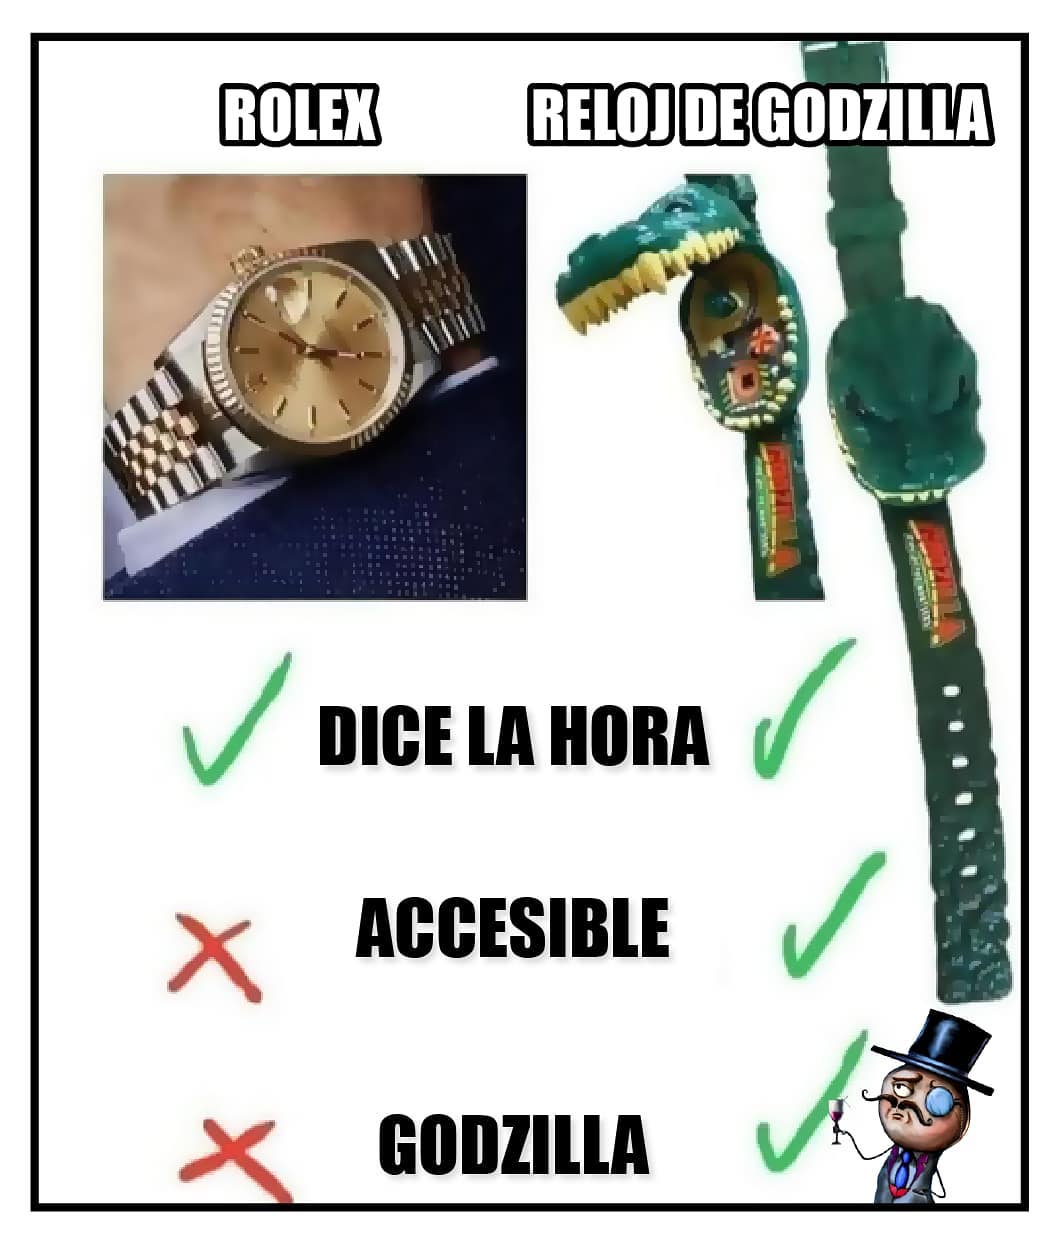 Rolex: Dice la hora.  Reloj de Godzilla: Dice la hora. accesible. Godzilla.